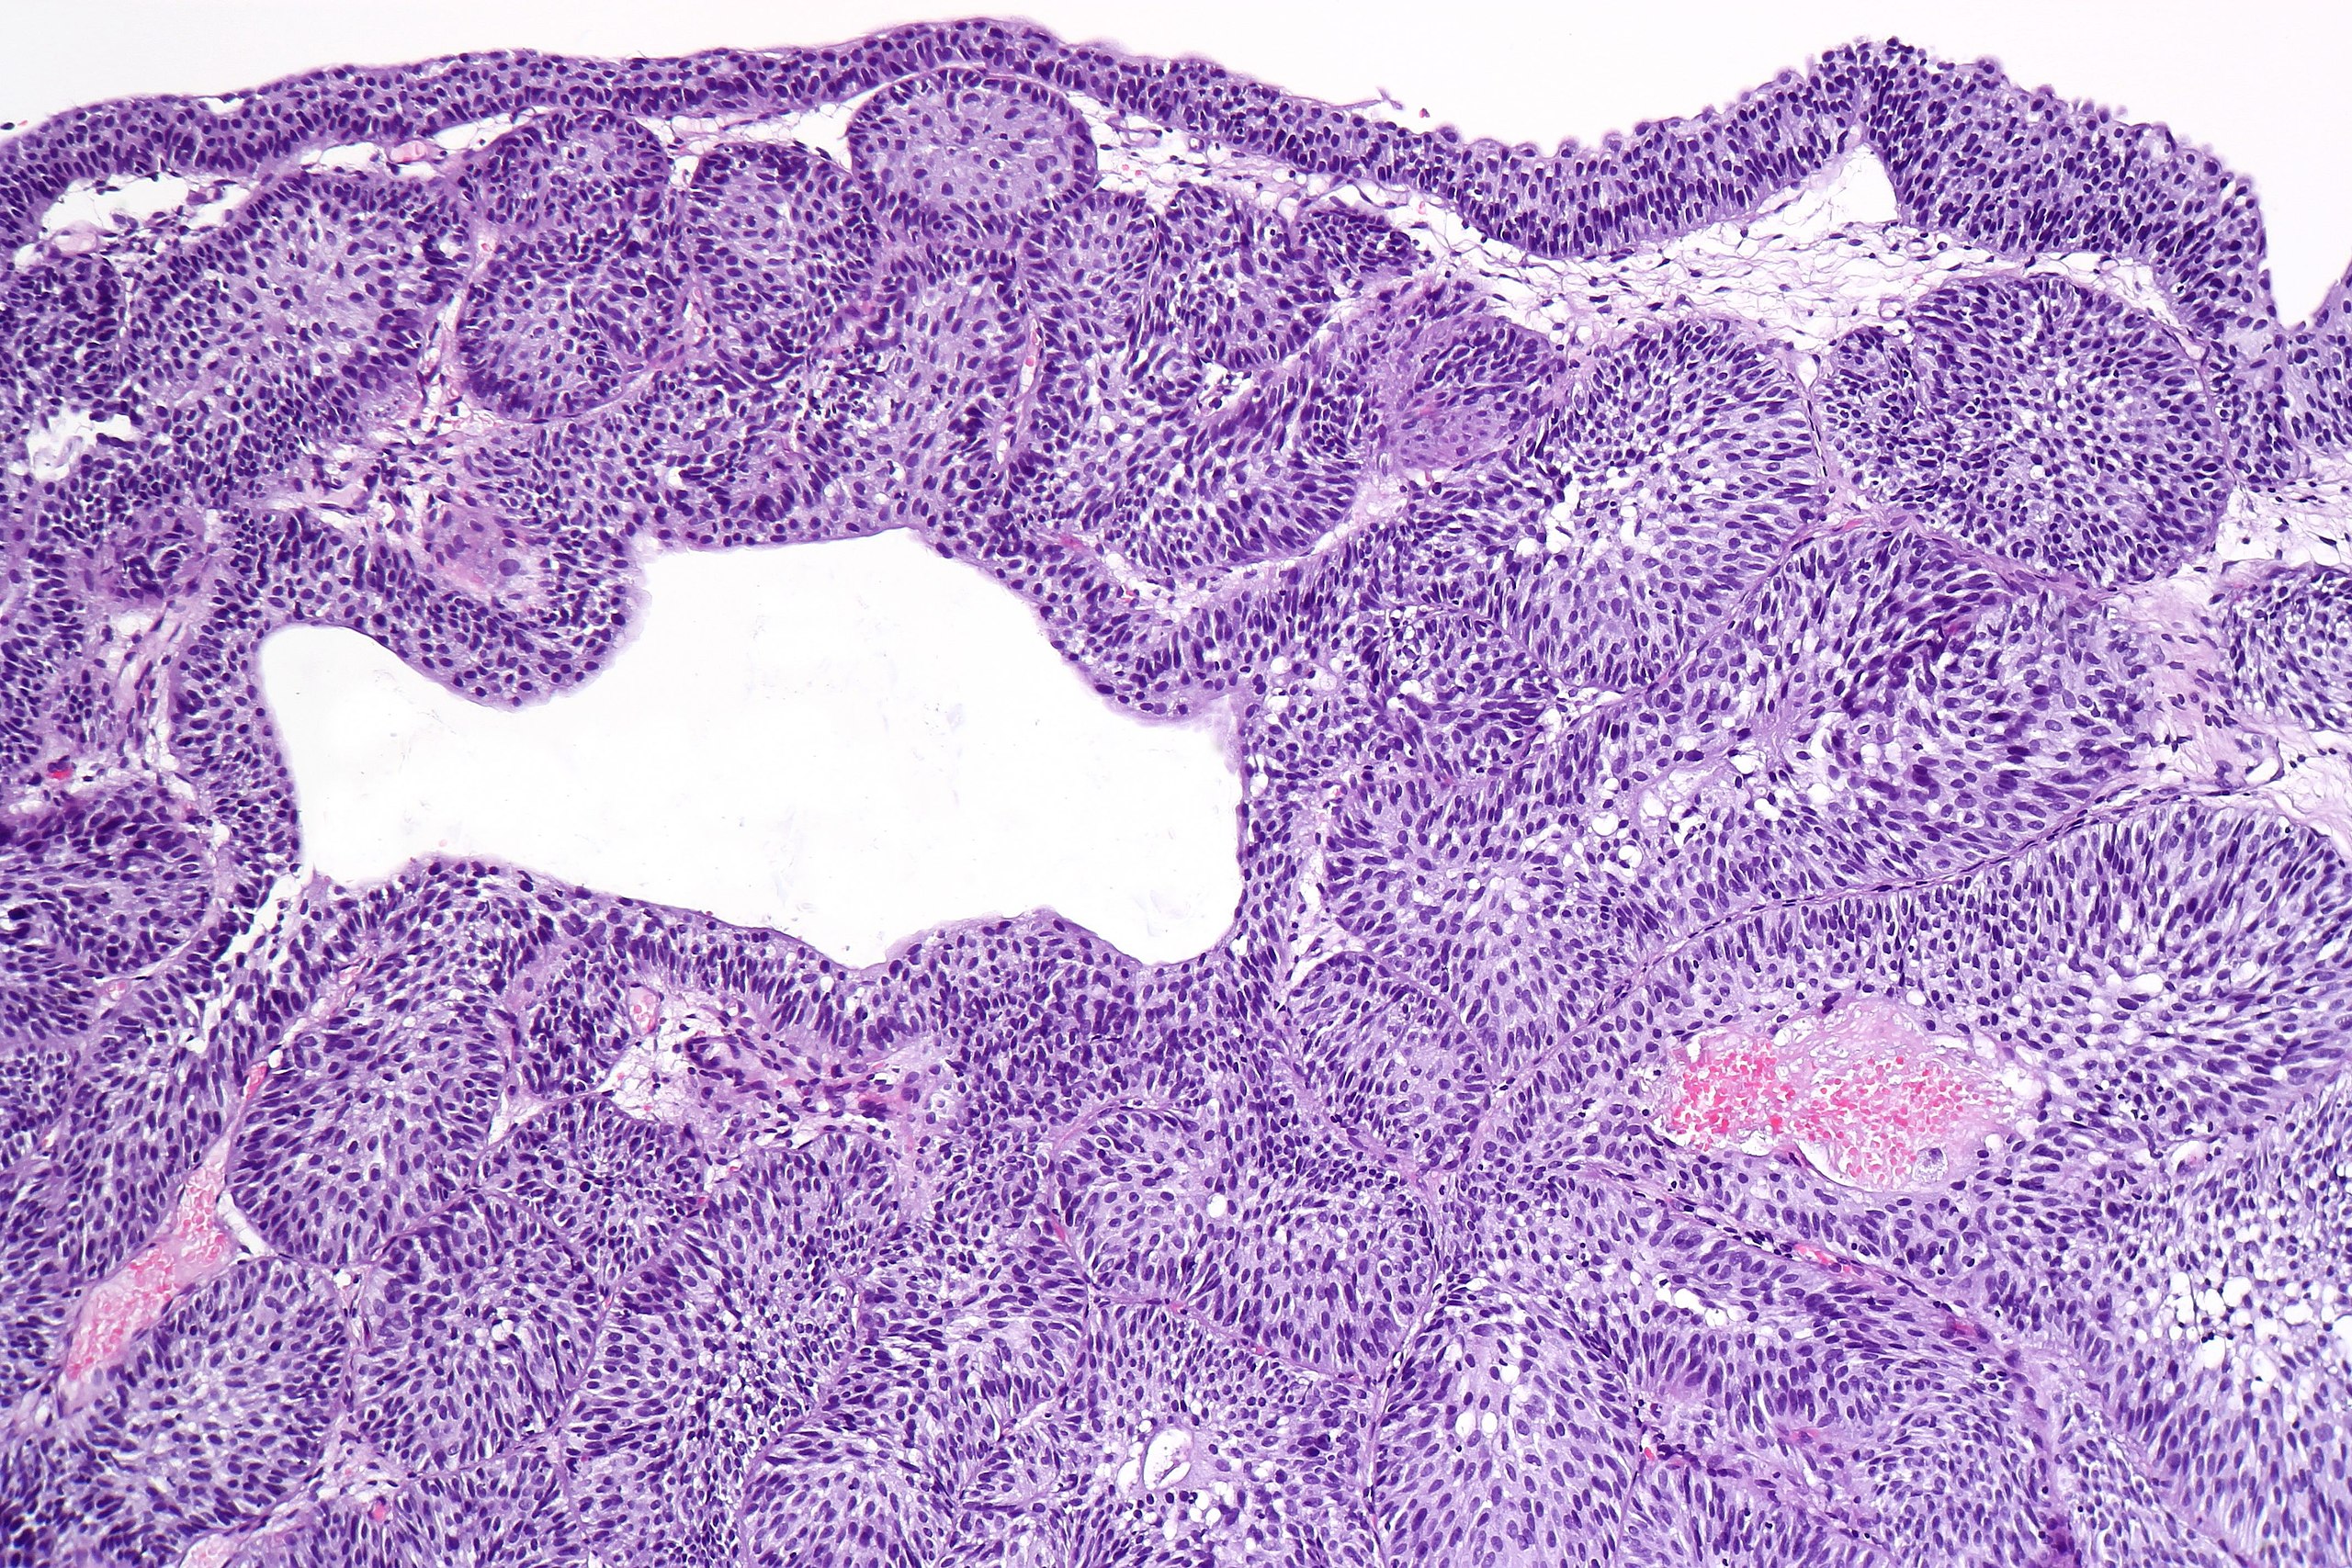 Archive issue | RJME, Bladder inverted papilloma pathology